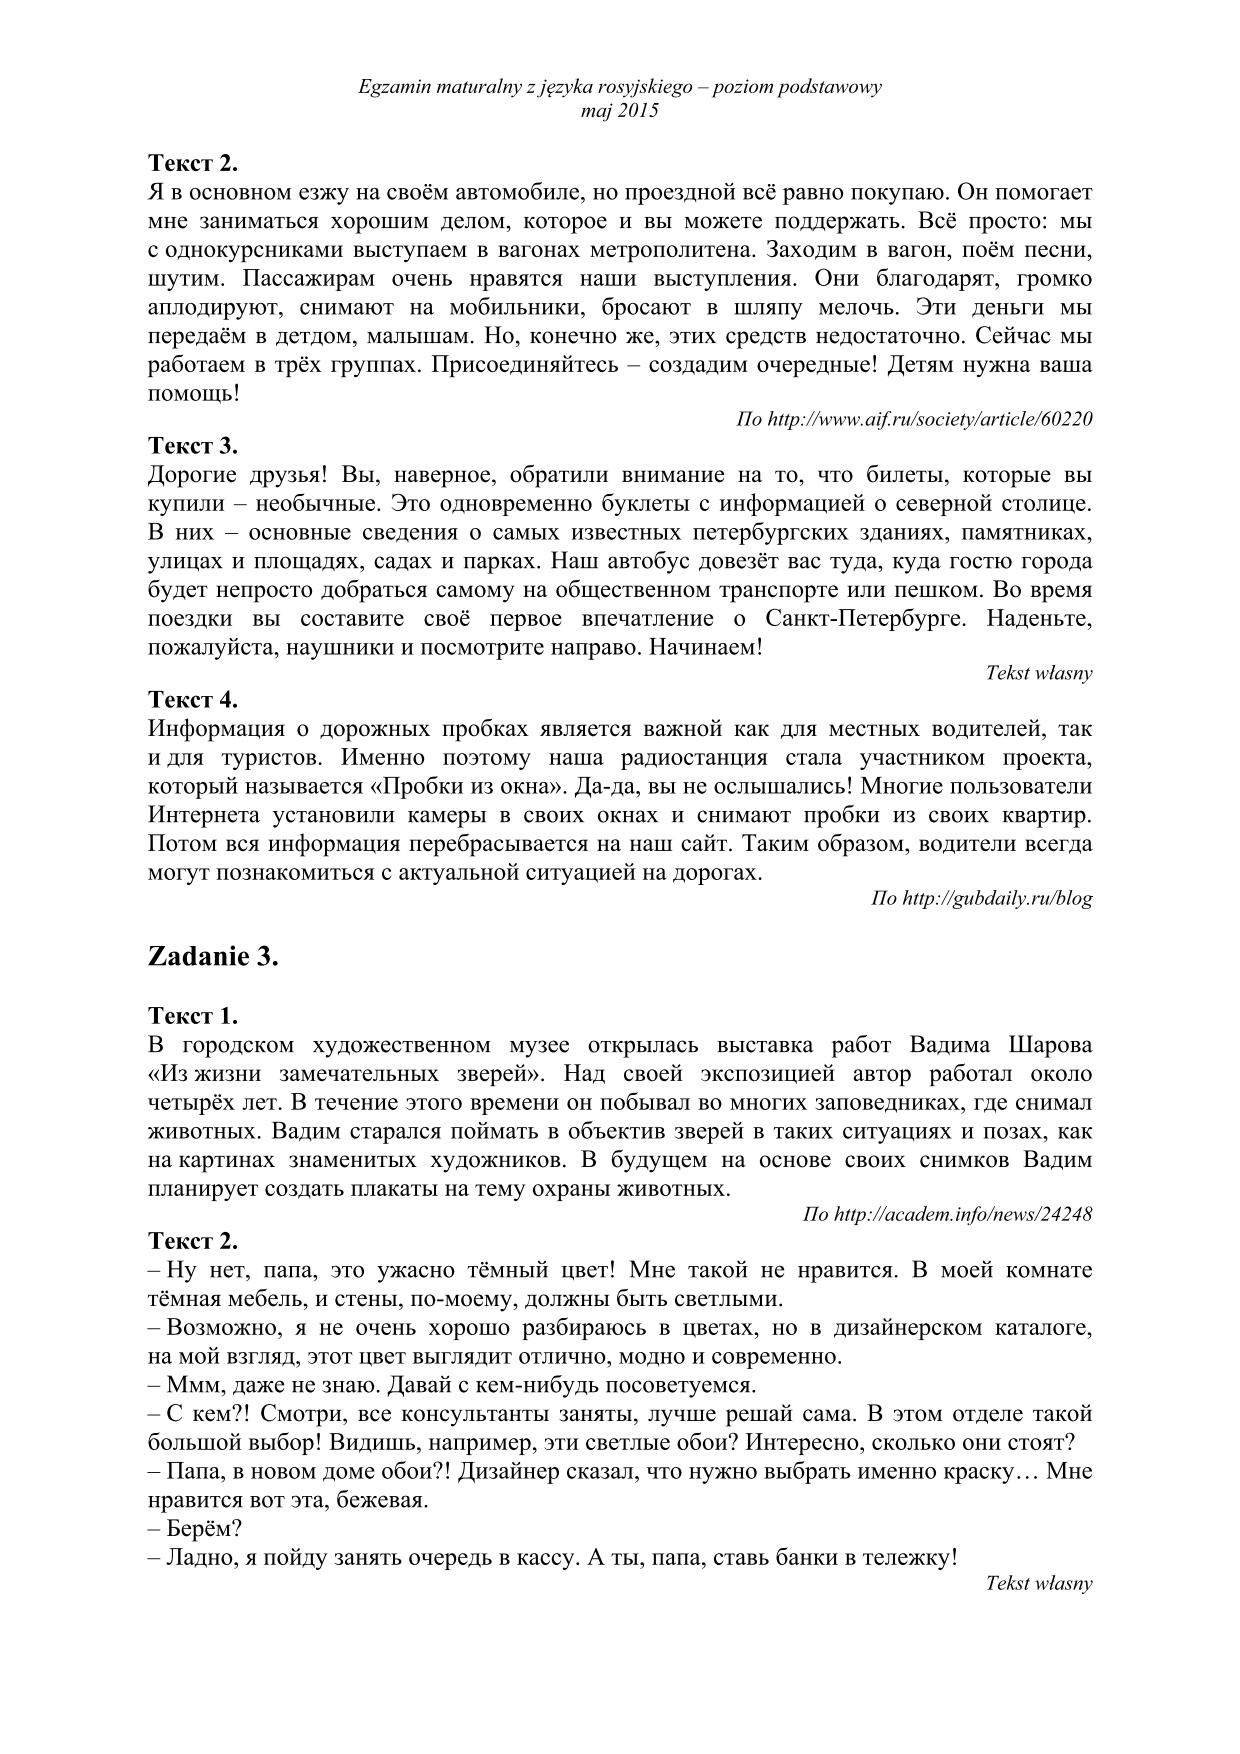 transkrypcja-rosyjski-poziom-podstawowy-matura-2015-2